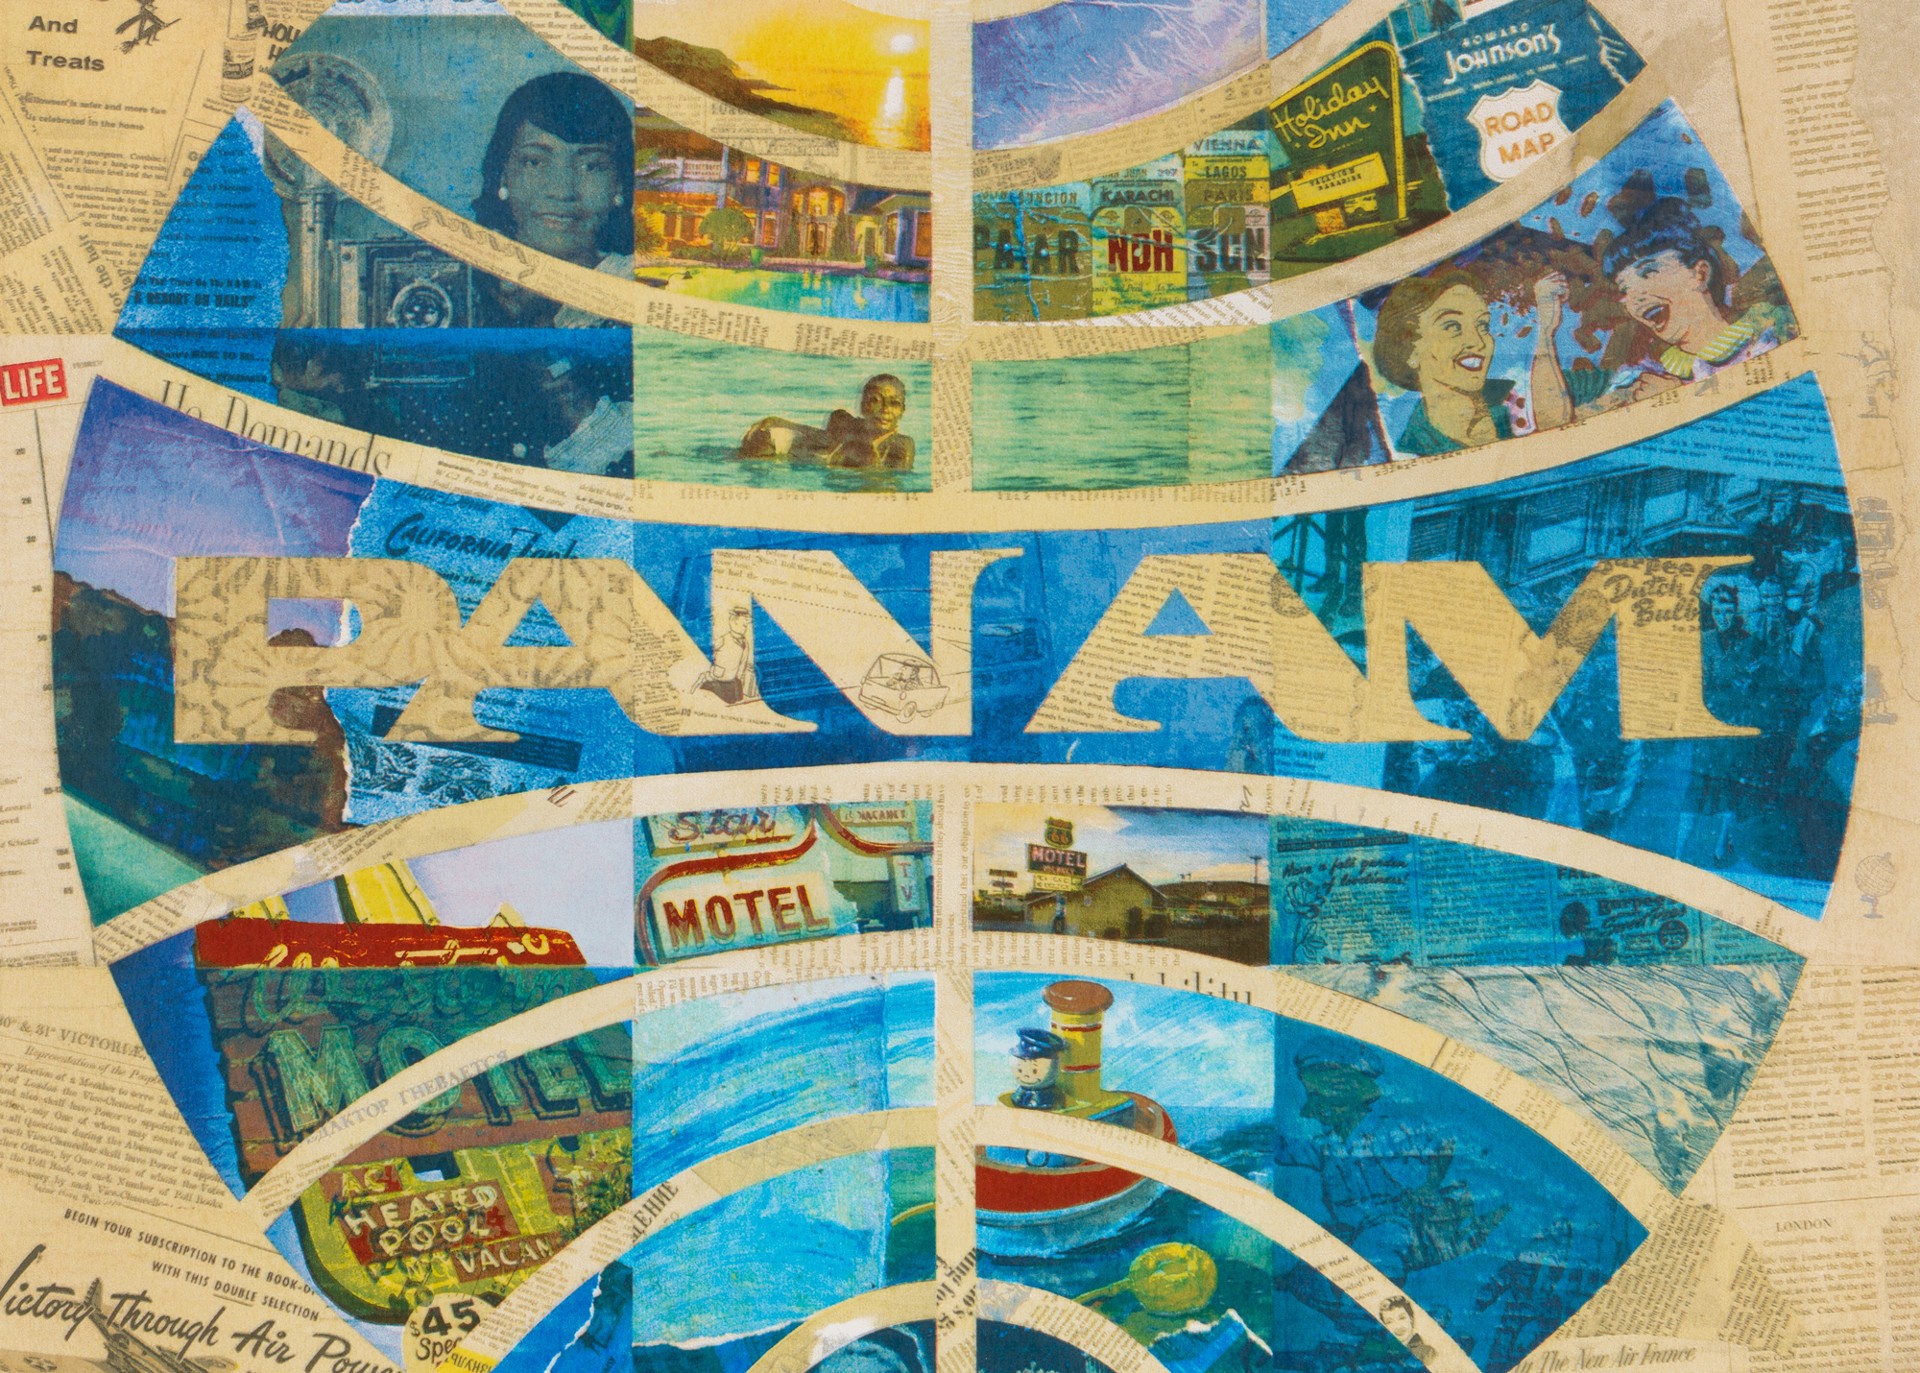 Pan Am by Cey Adams